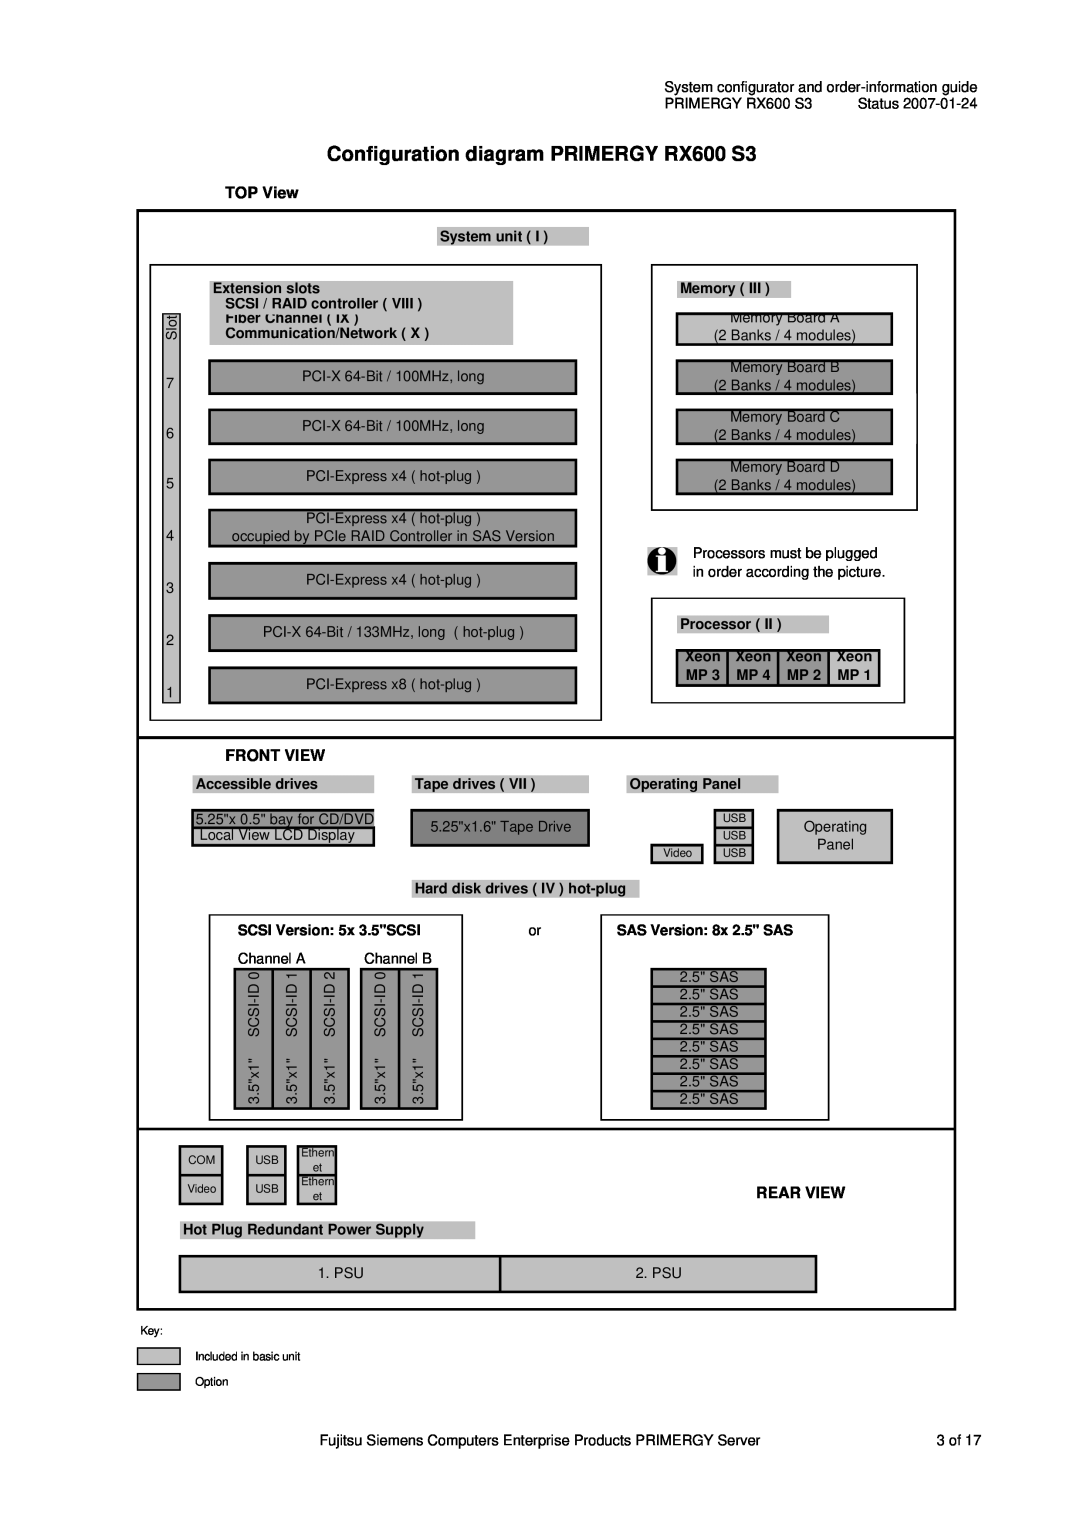 Fujitsu Siemens Computers manual Configuration diagram PRIMERGY RX600 S3, TOP View, Front View, Rear View 